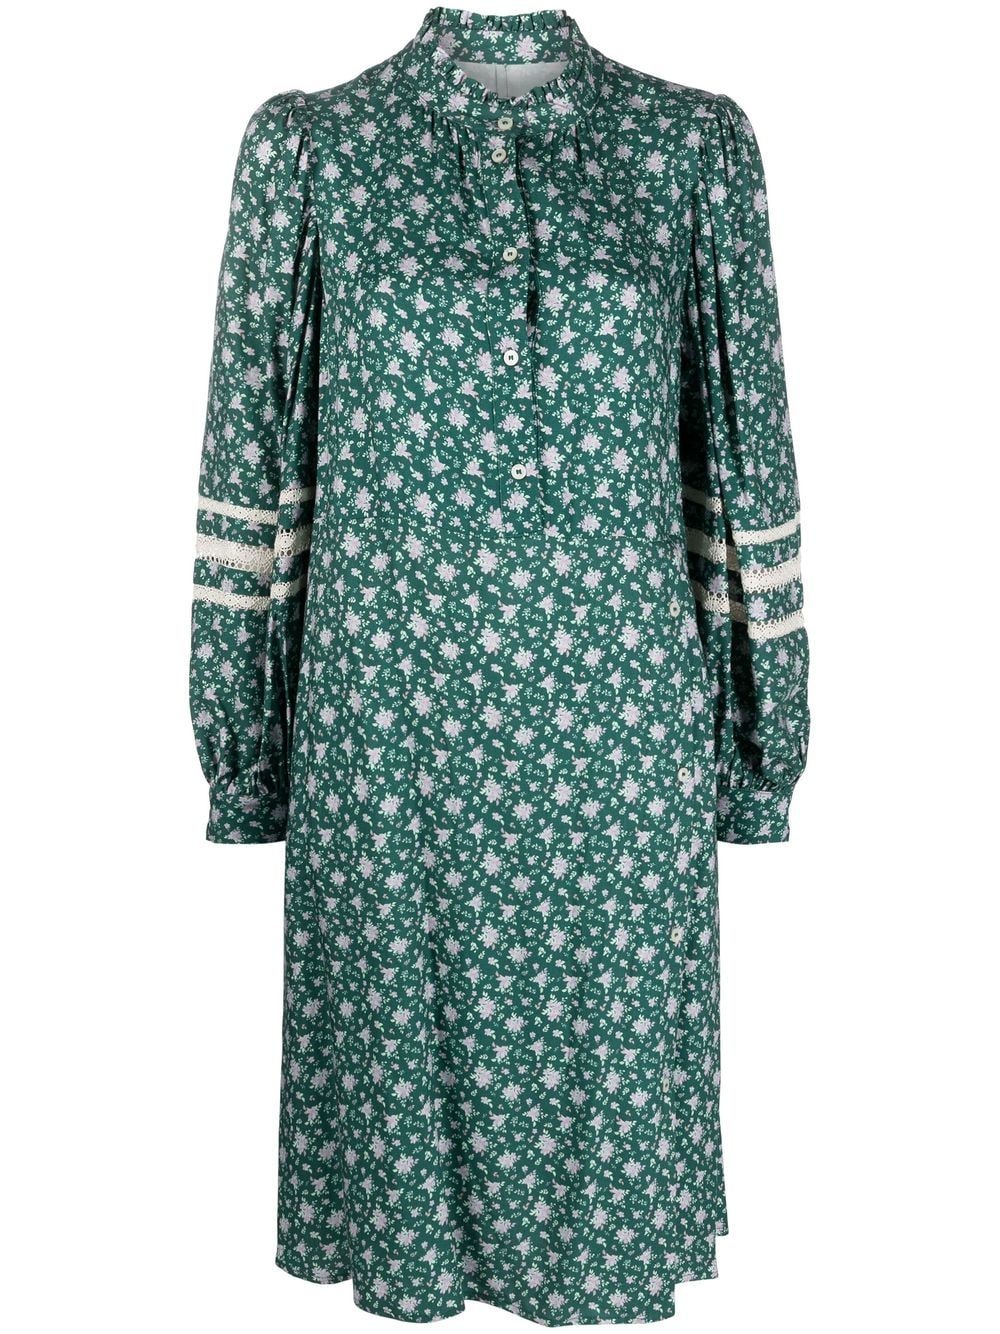 Woolrich printed belted knee-length dress - Green von Woolrich